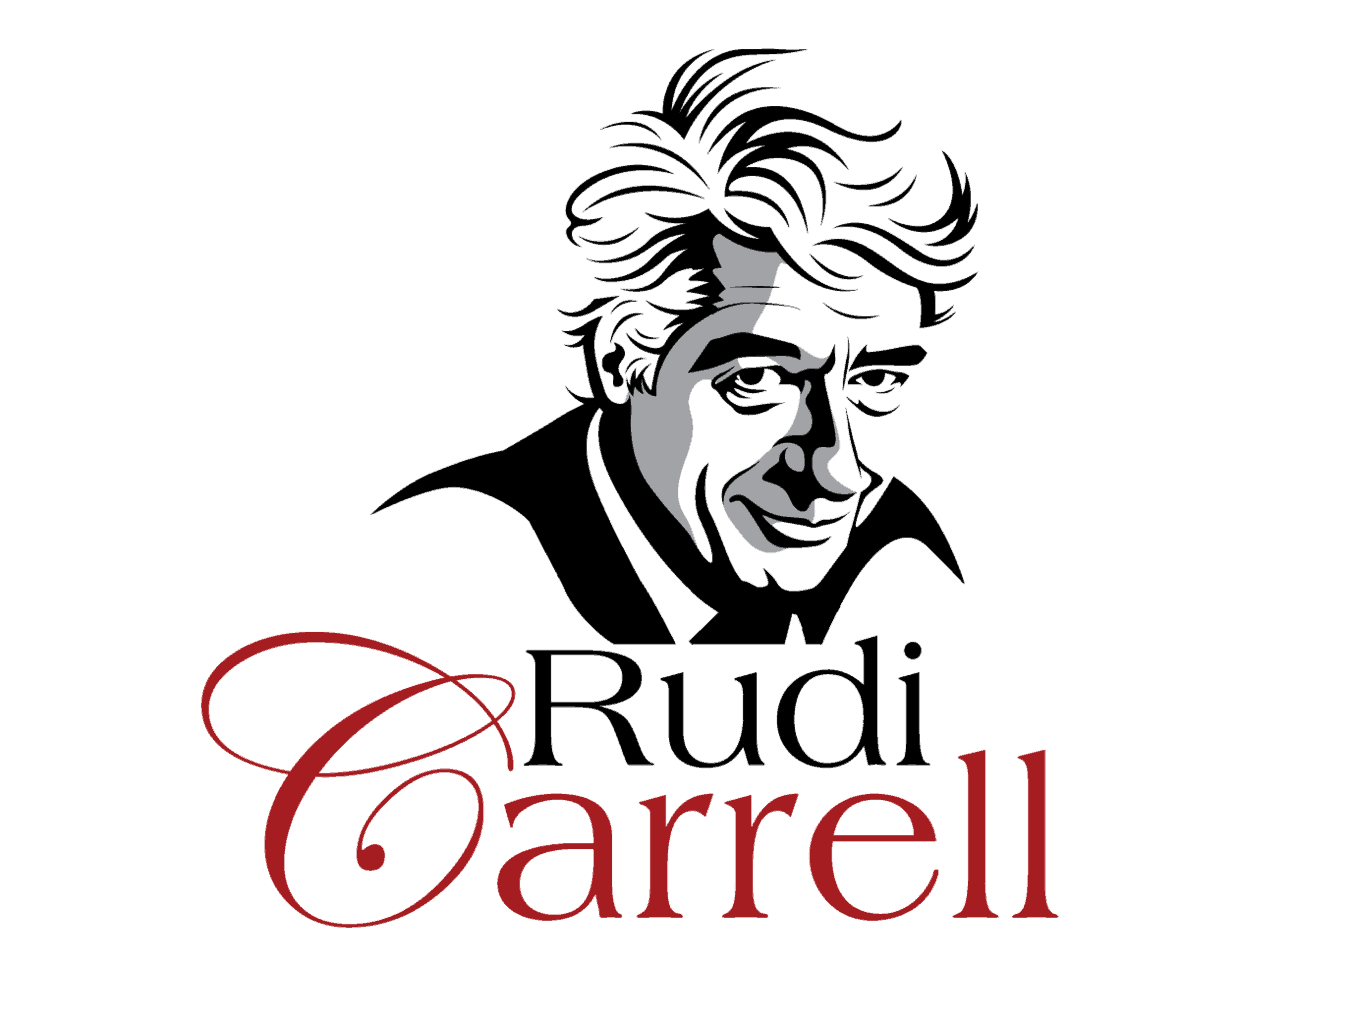 Rudi Carrell